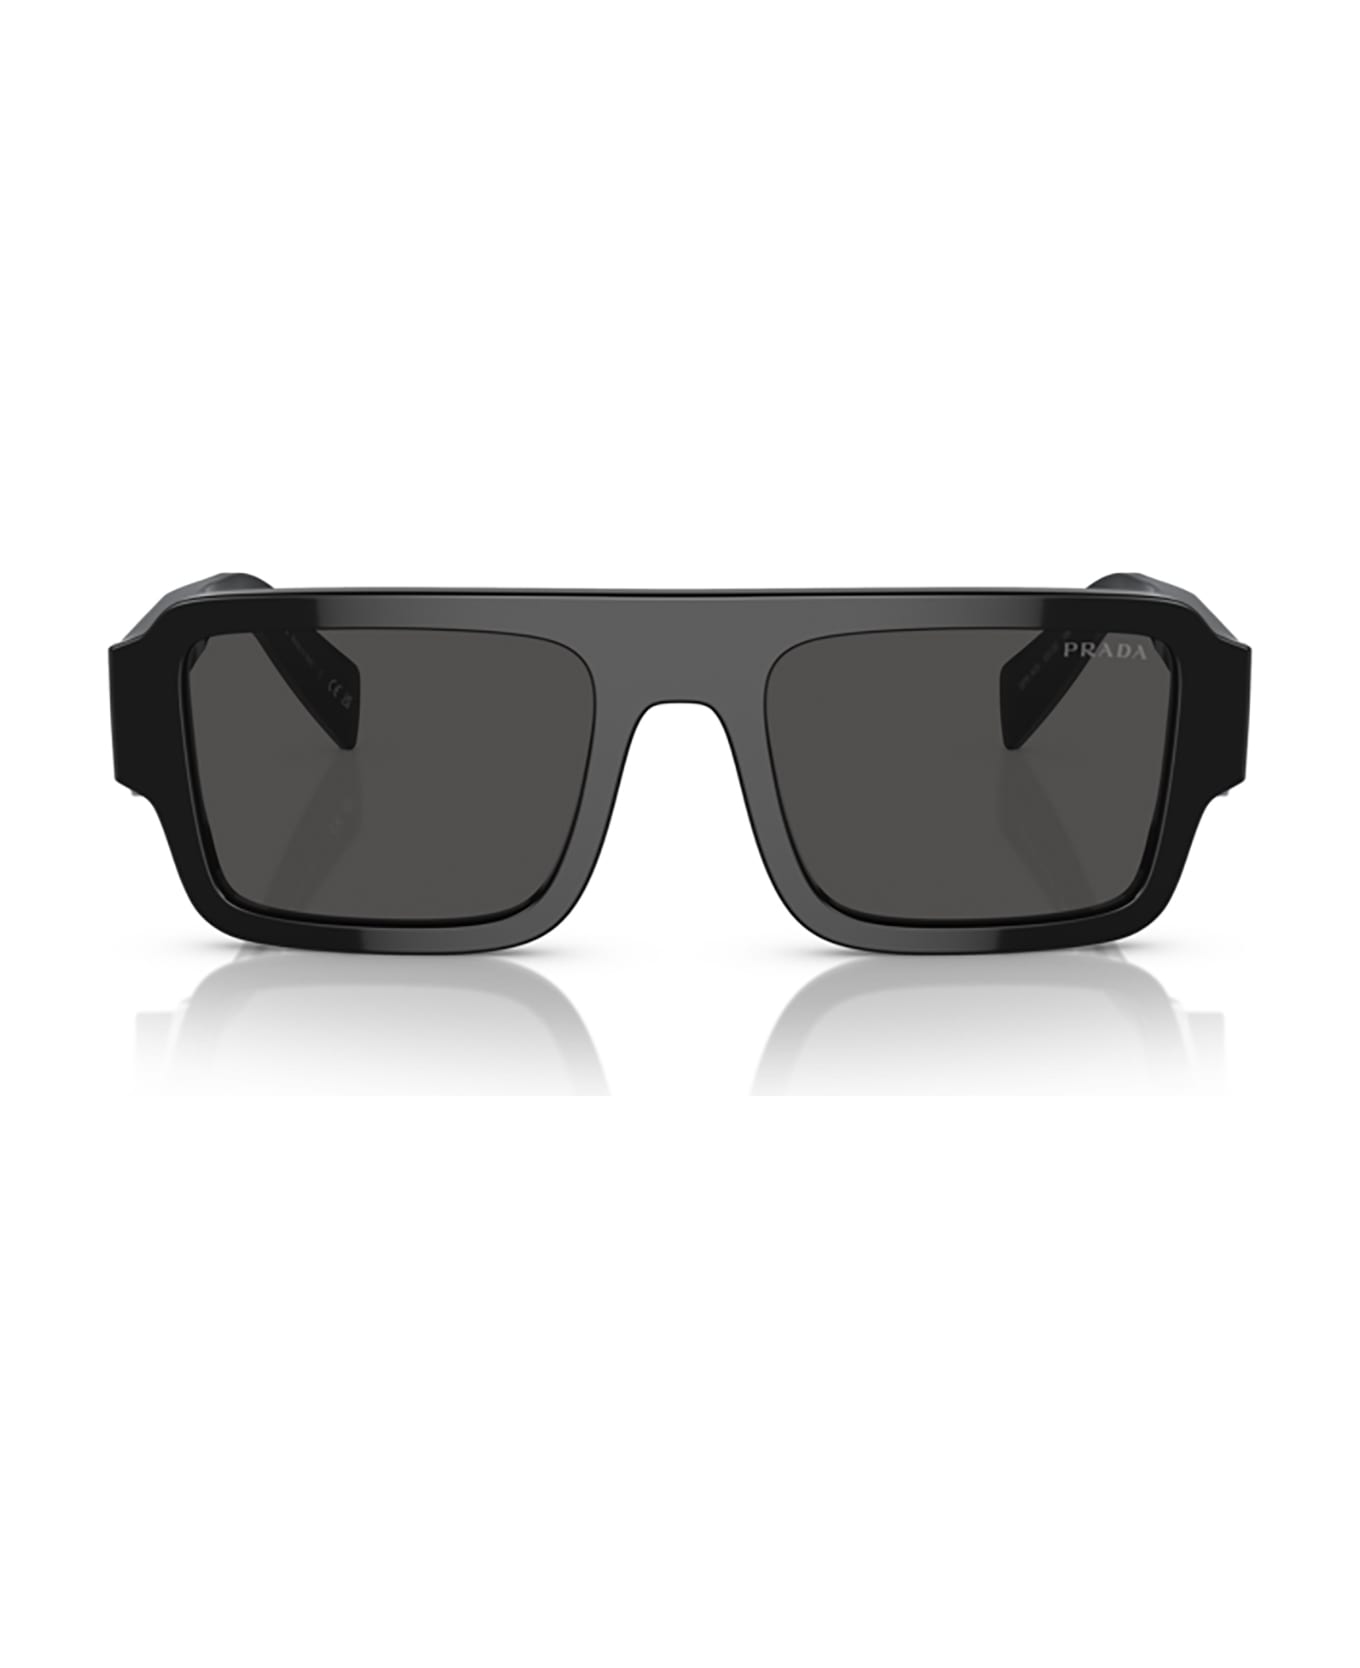 Prada Eyewear Pr A05s Black Sunglasses - Black